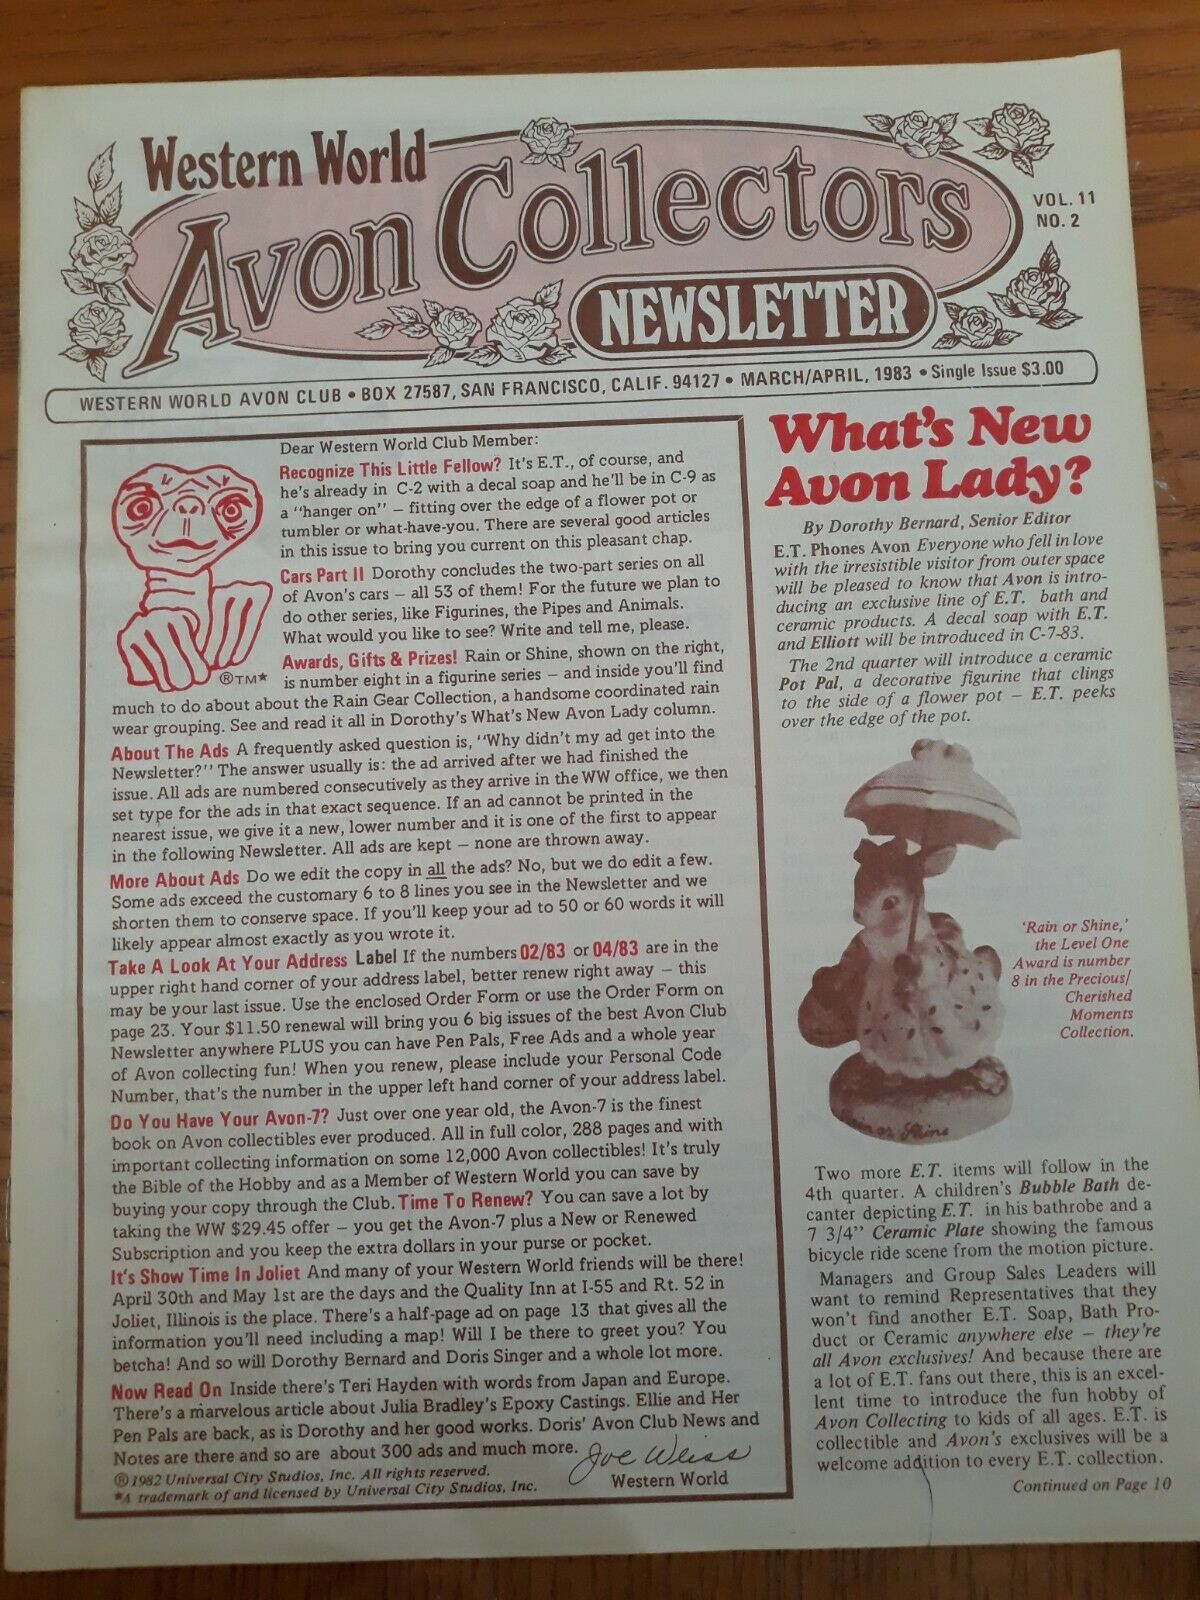 Western World Avon Collectors Newsletter - Vol 11 No 2 - March/april 1983